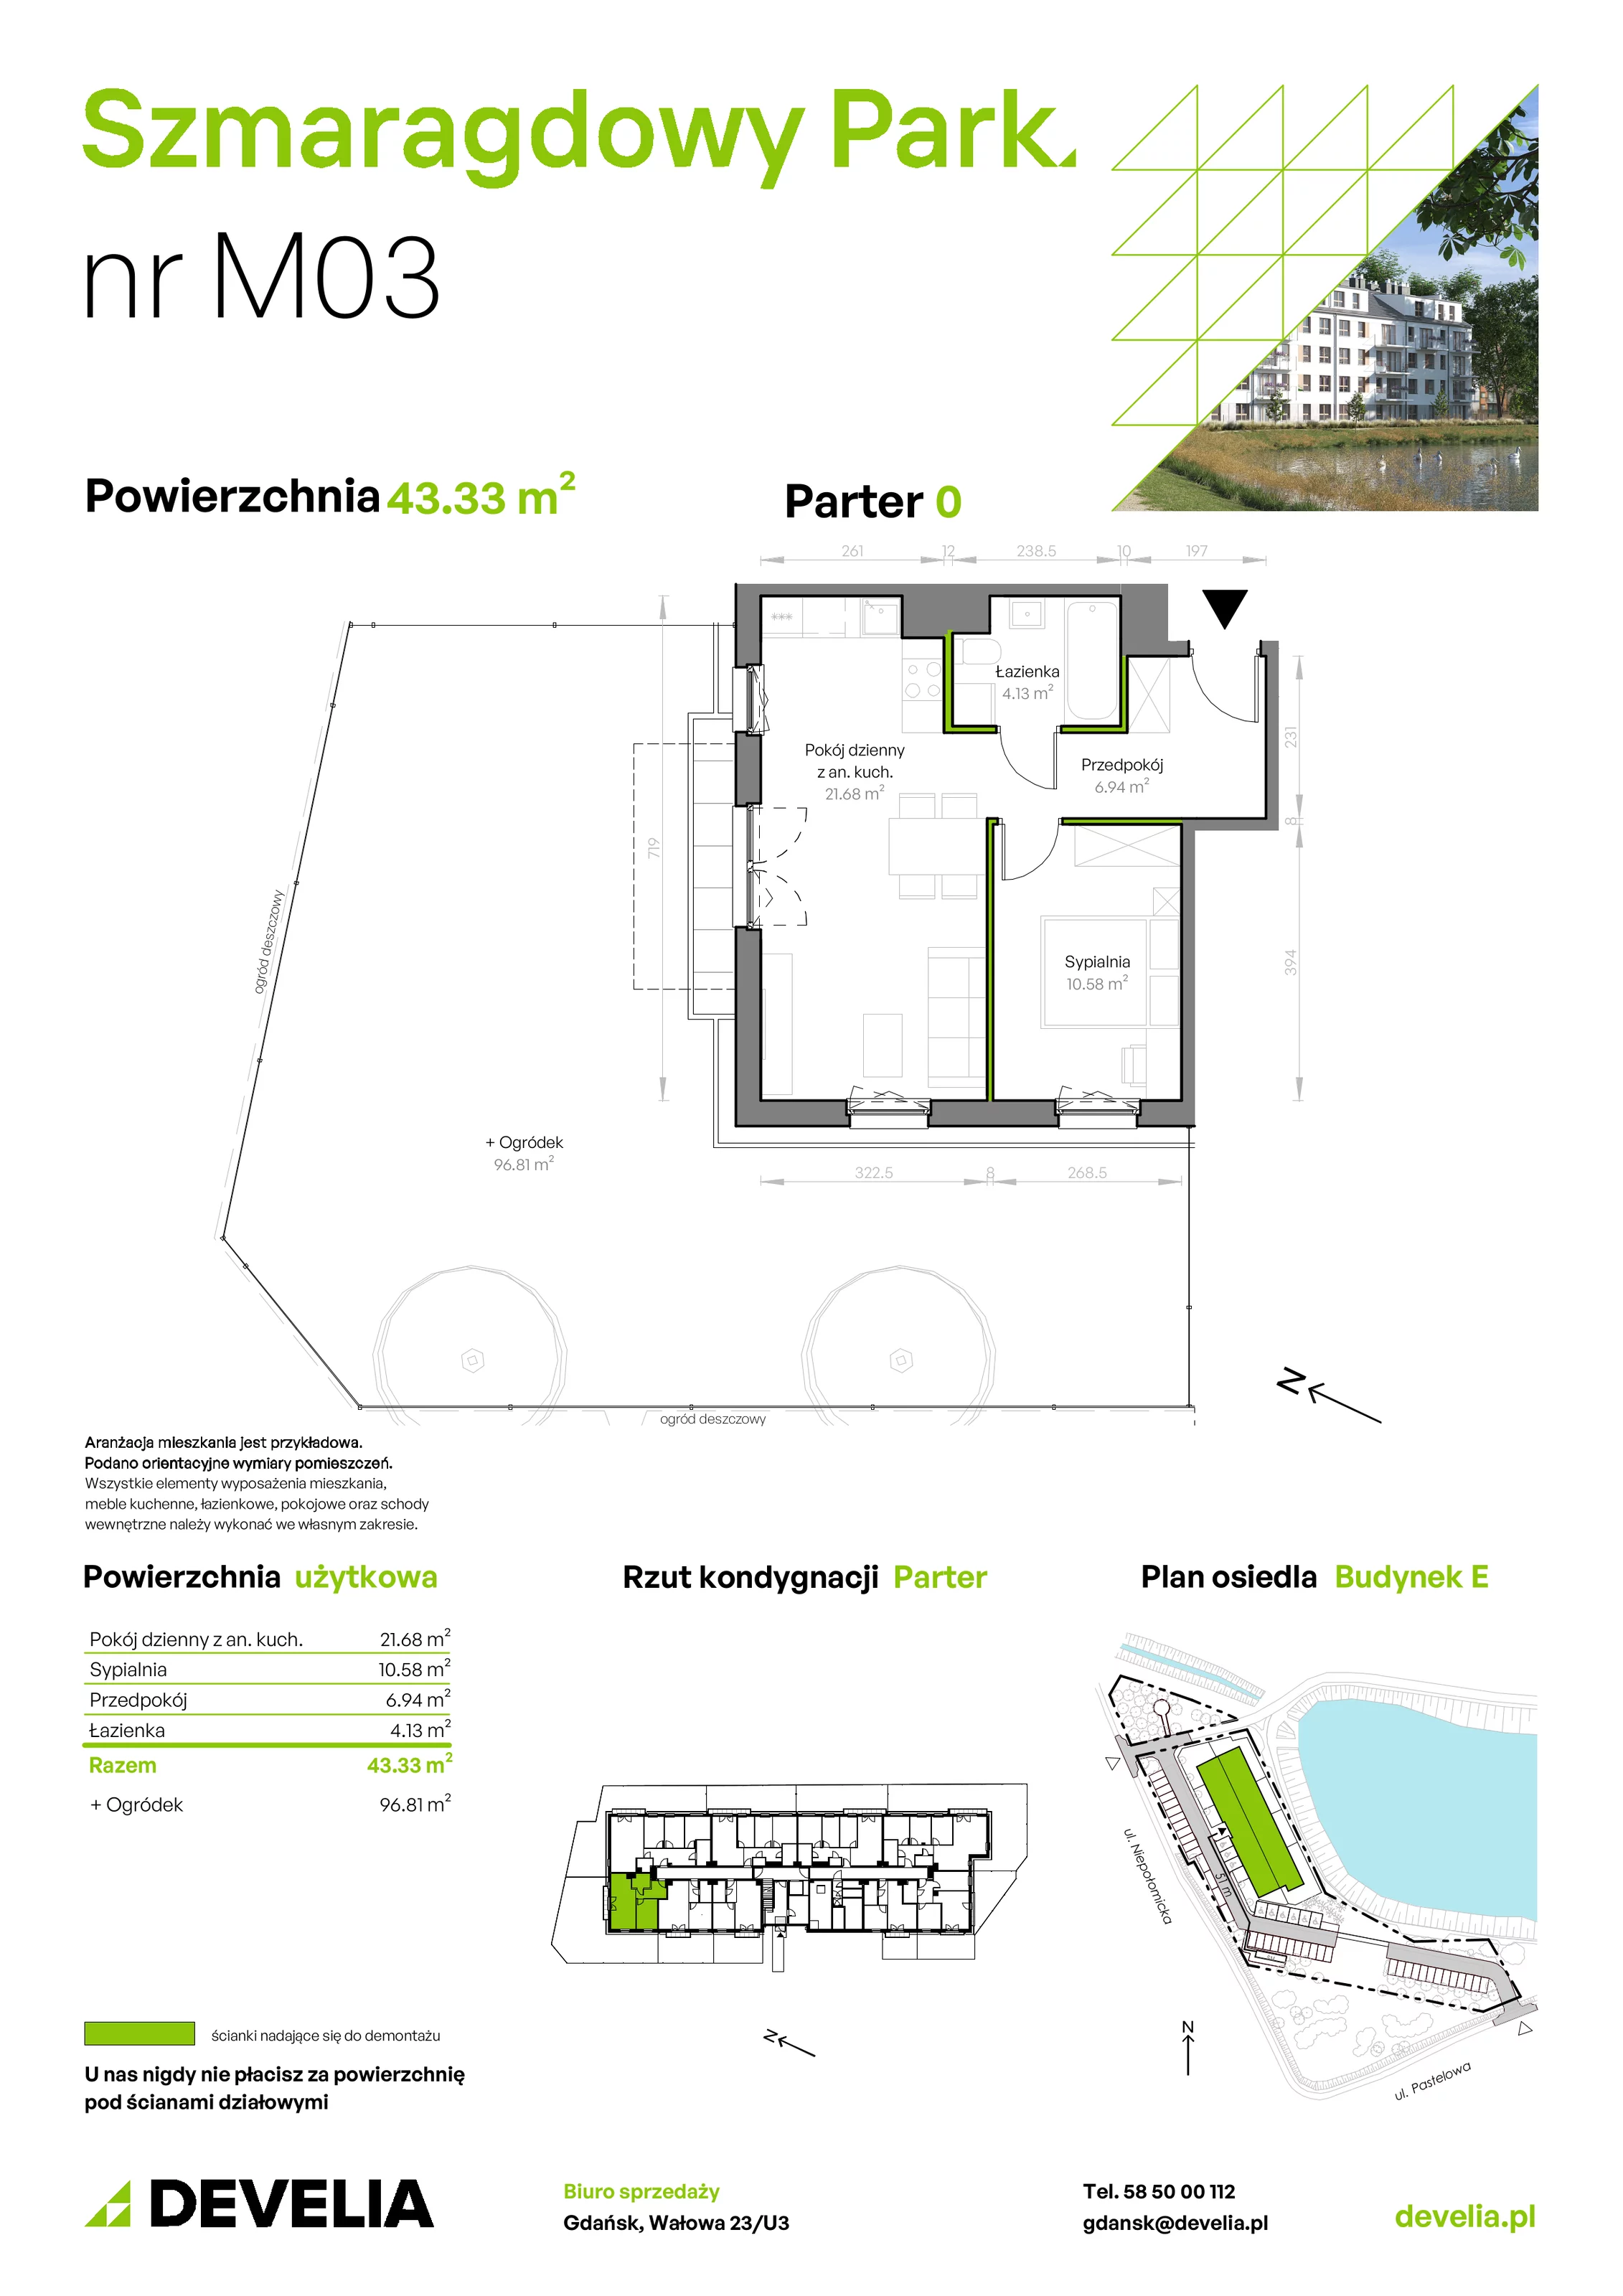 Mieszkanie 43,33 m², parter, oferta nr E/003, Szmaragdowy Park, Gdańsk, Orunia Górna-Gdańsk Południe, Łostowice, ul. Topazowa 2